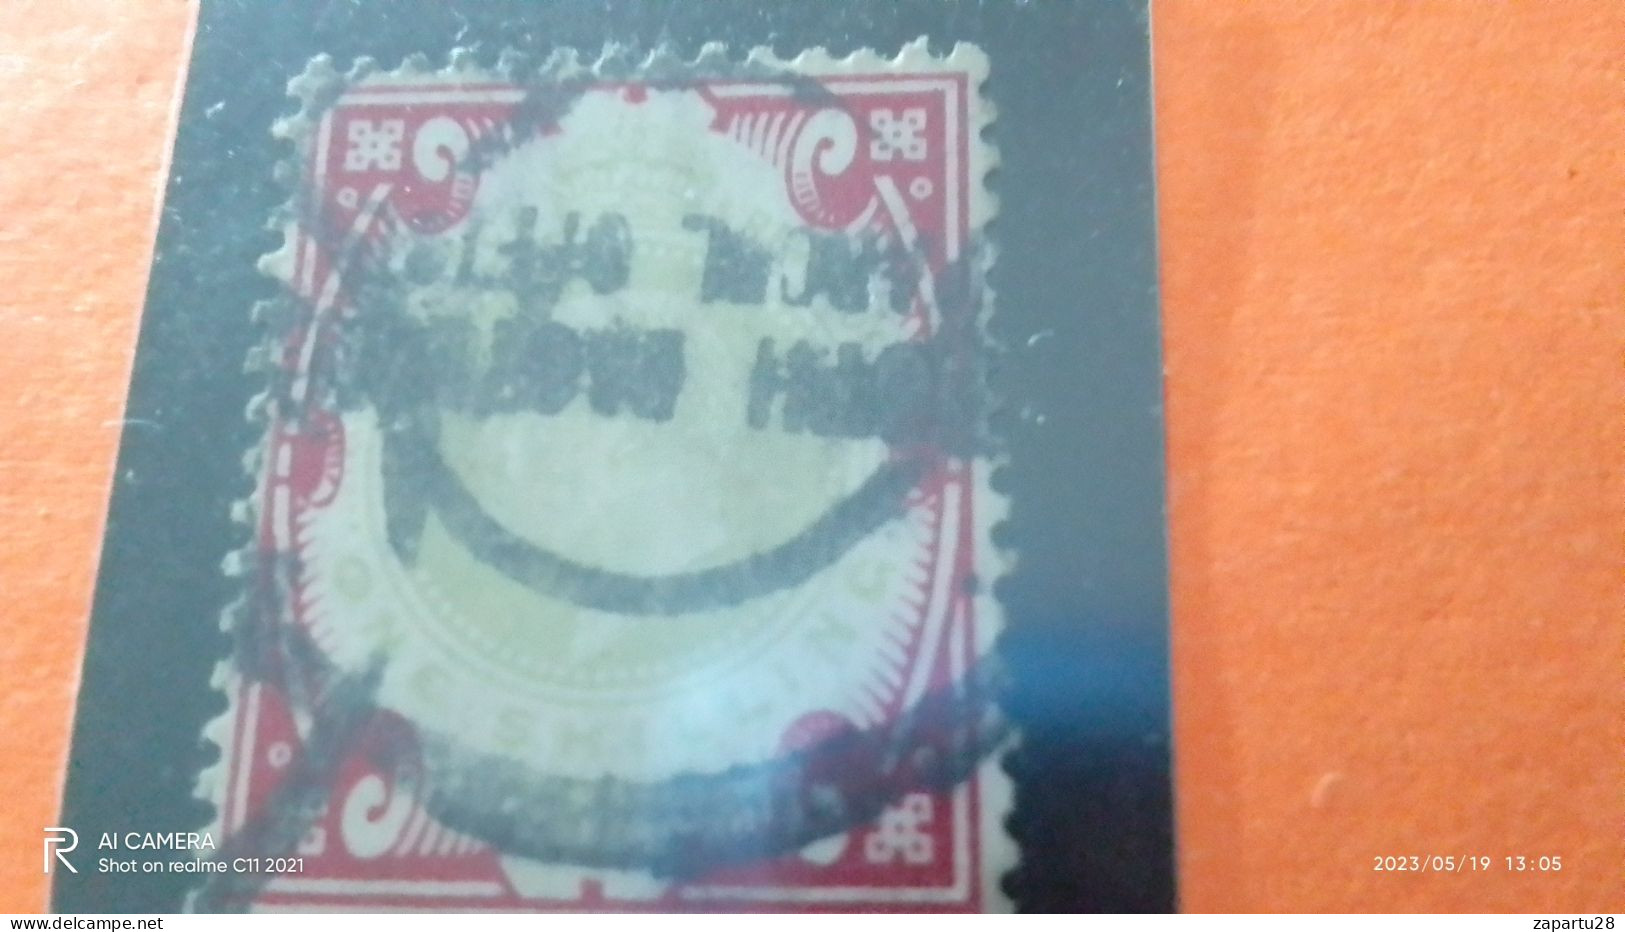 İNGİLTERE- 1900        1SH       VICTORIA       USED - Used Stamps